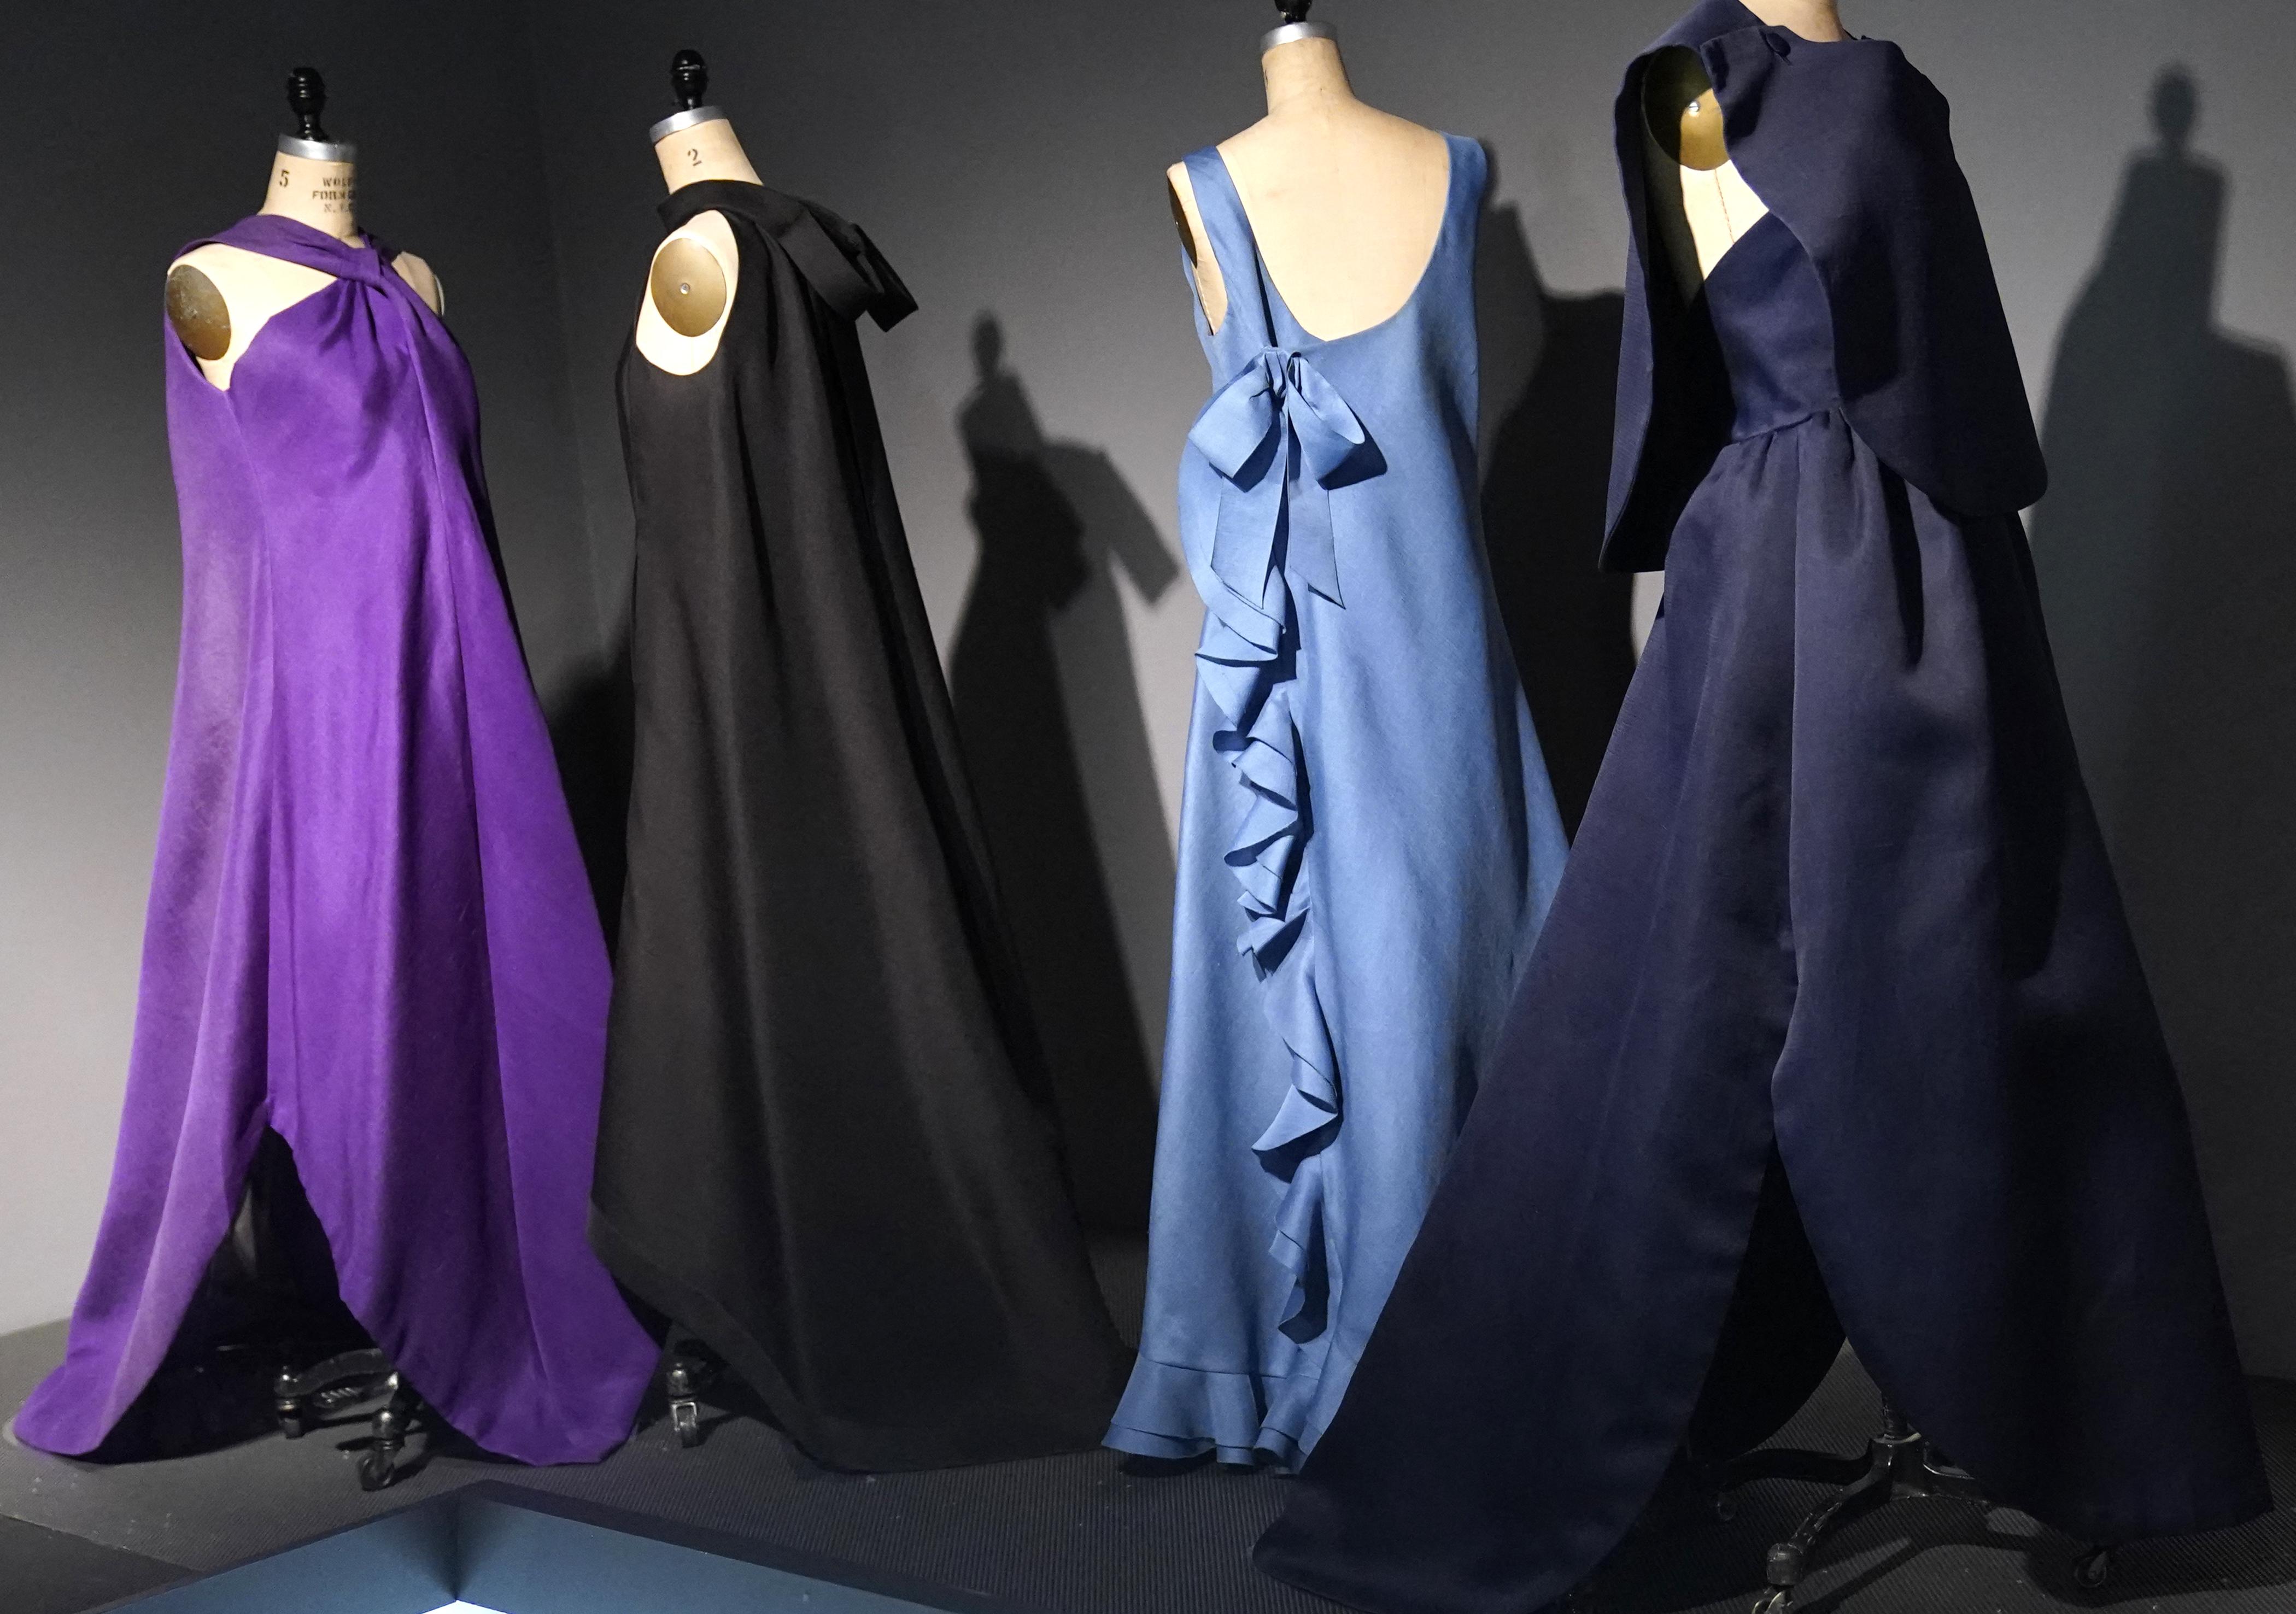 Des robes signées Givenchy, Cardin et Bohan